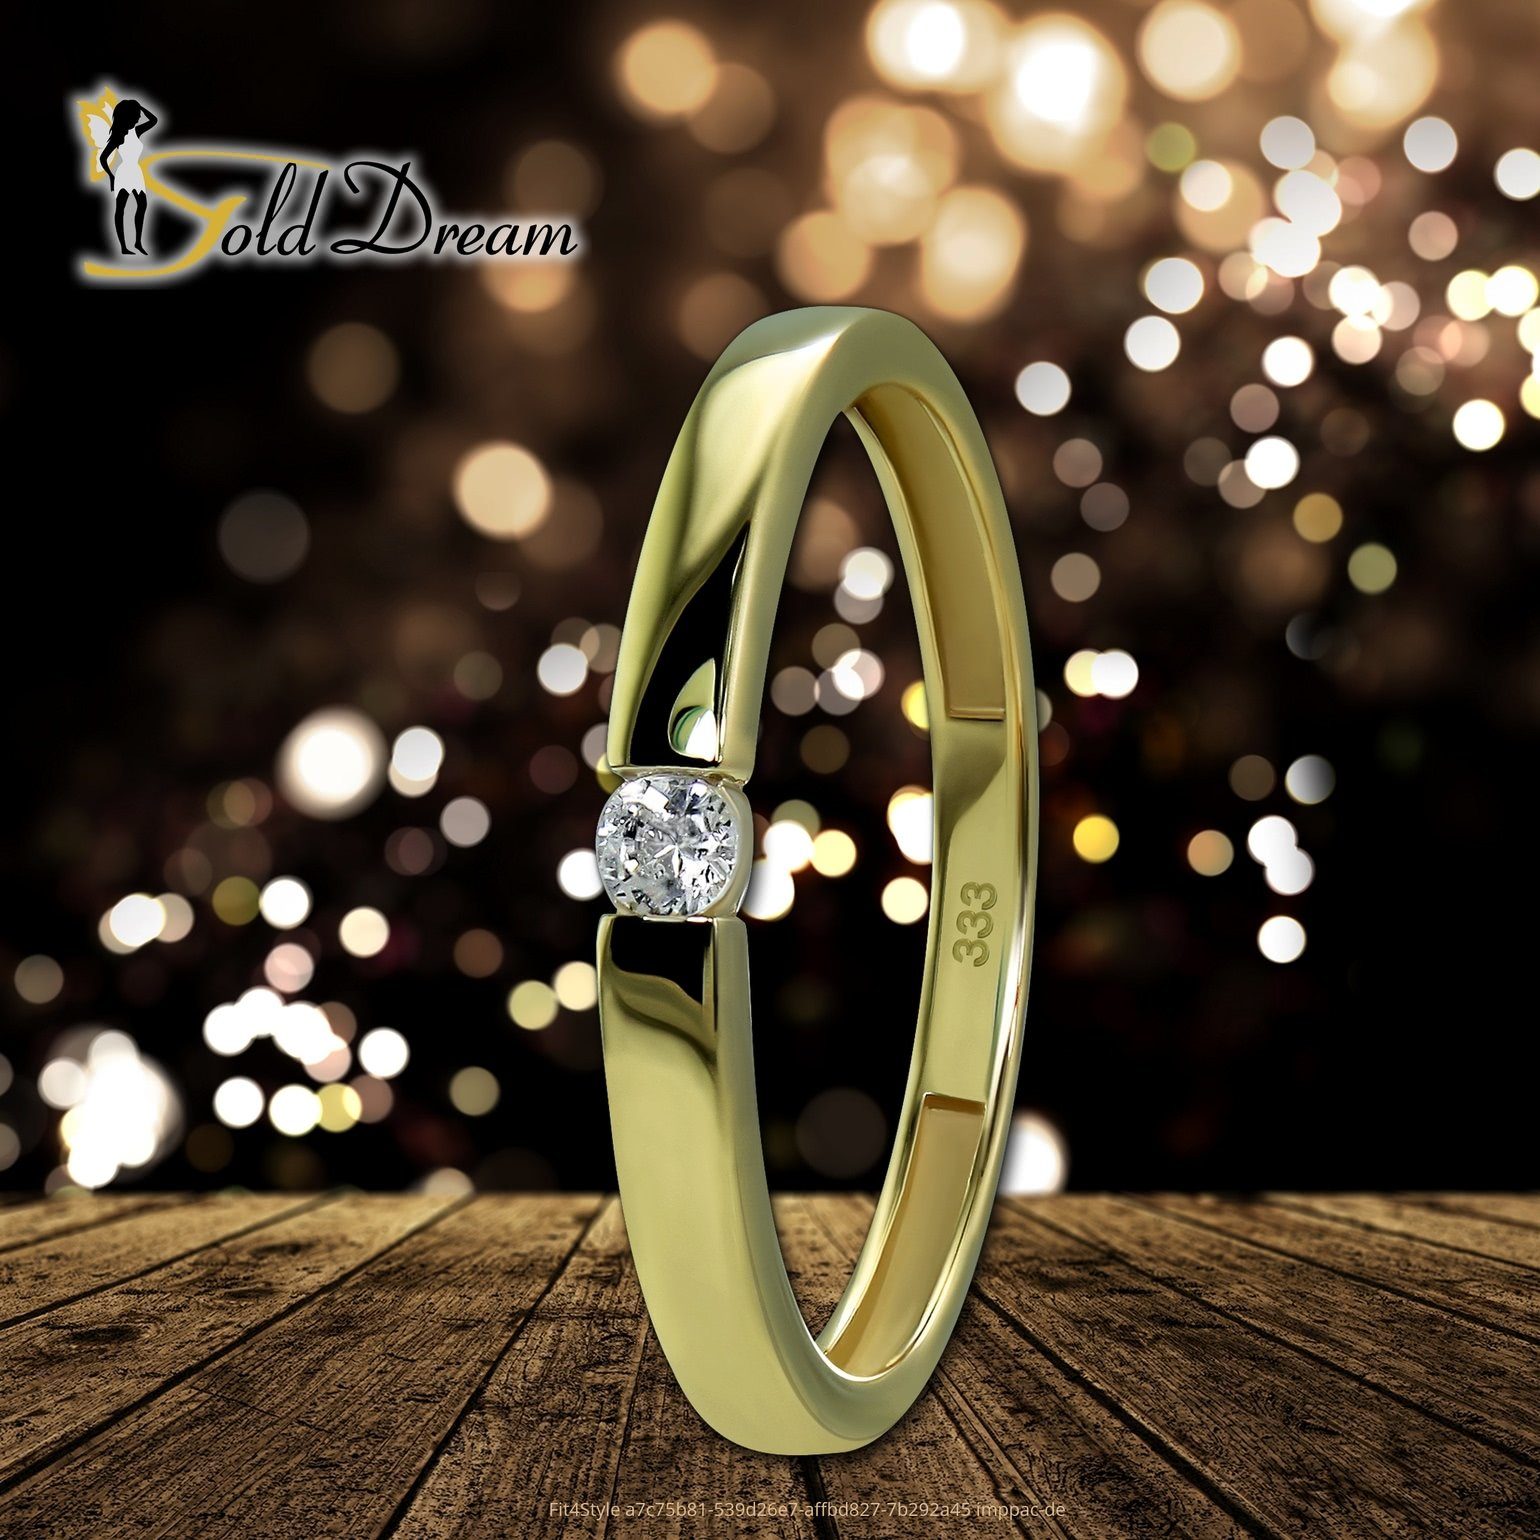 GoldDream Goldring GoldDream Classic (Fingerring), Gelbgold 333 Classic Damen Gold - weiß 8 Ring Gr.58 Farbe: Karat, Ring gold